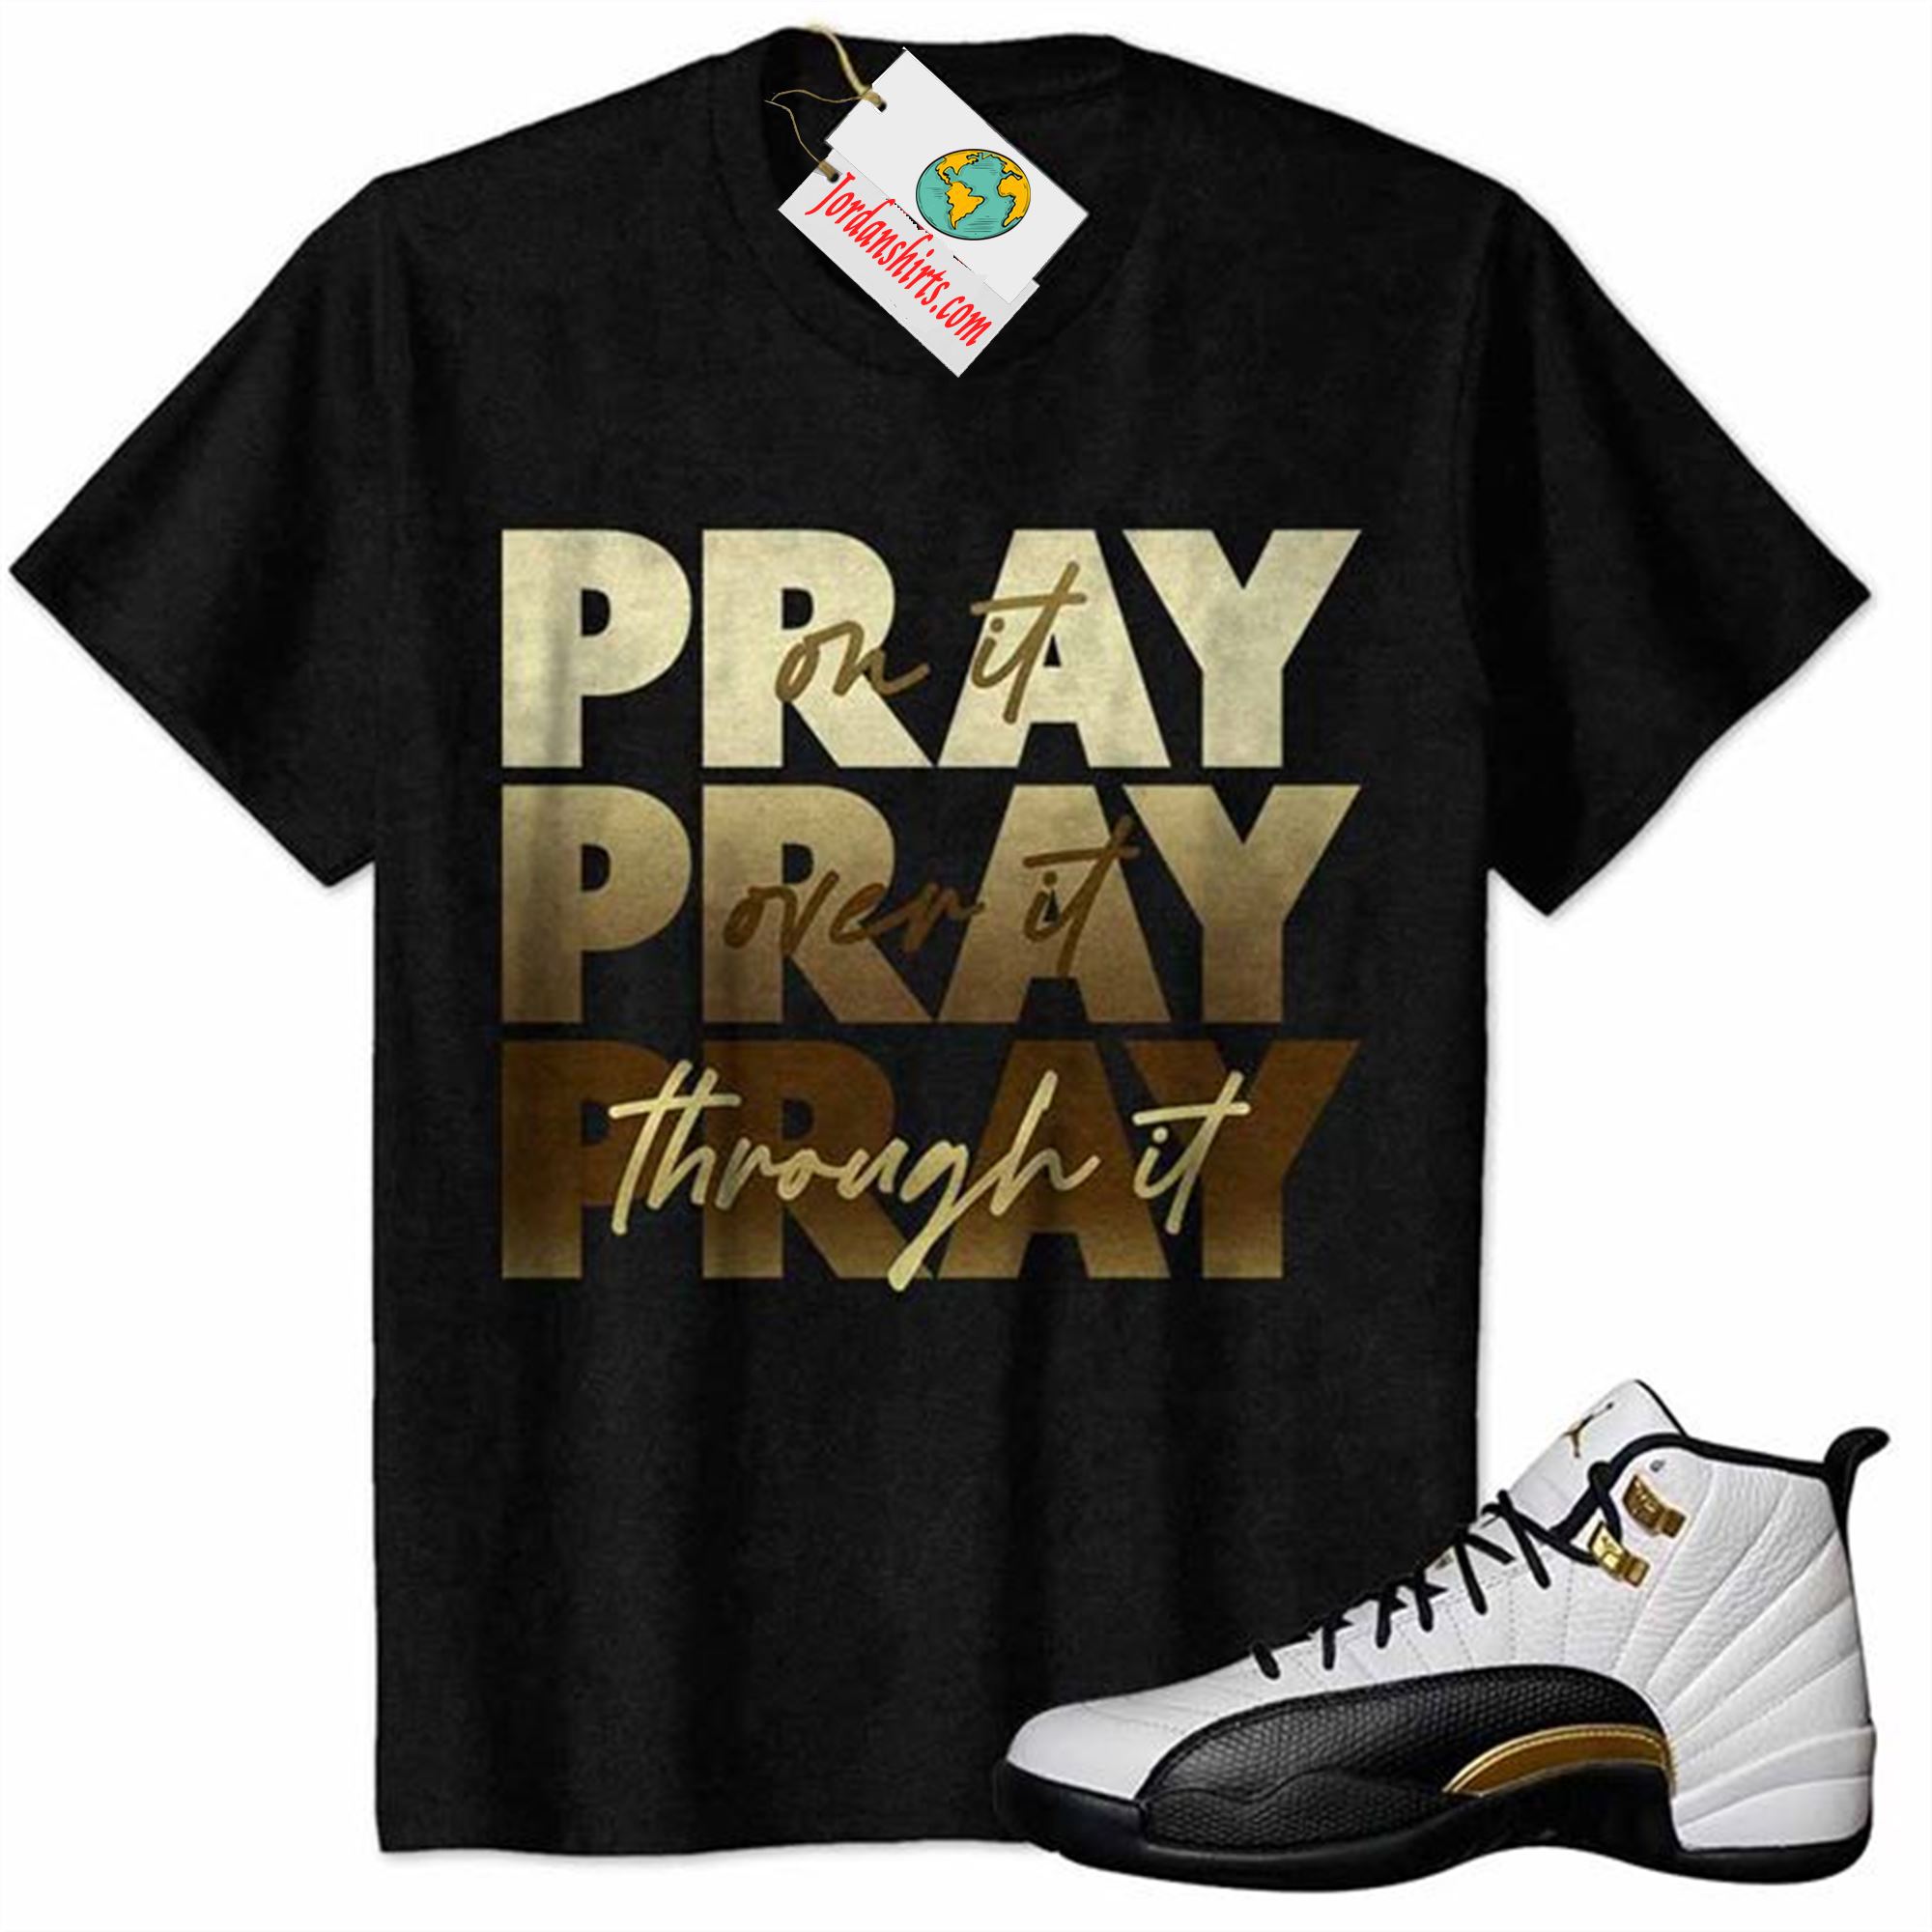 Jordan 12 Shirt, Pray On It Pray Over It Pray Through It Black Air Jordan 12 Royalty 12s Full Size Up To 5xl